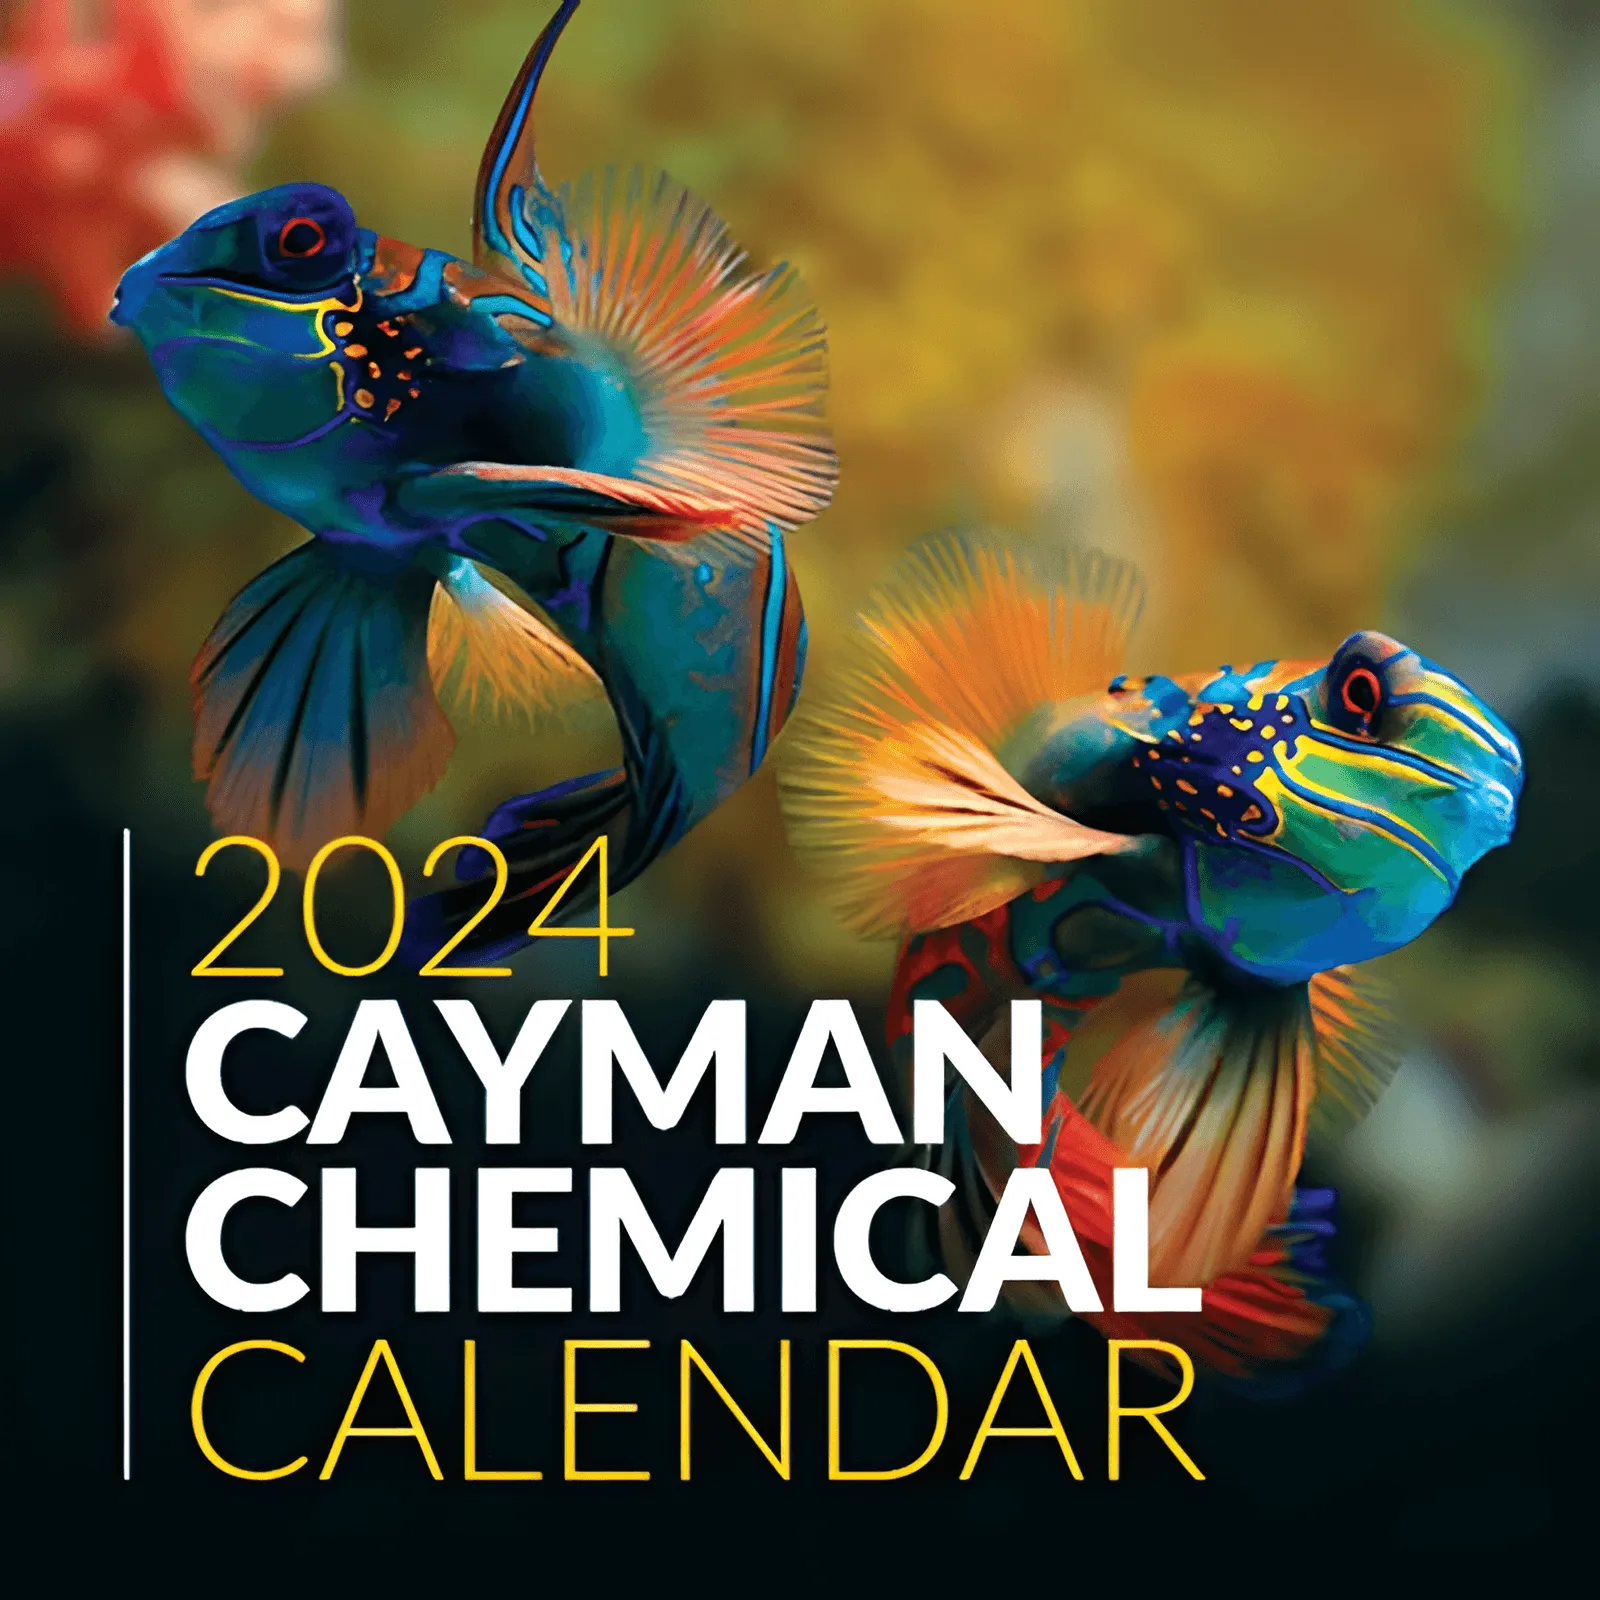 Free 2024 Cayman Calendar Free Samples by MAIL, Freebies, Free Stuff